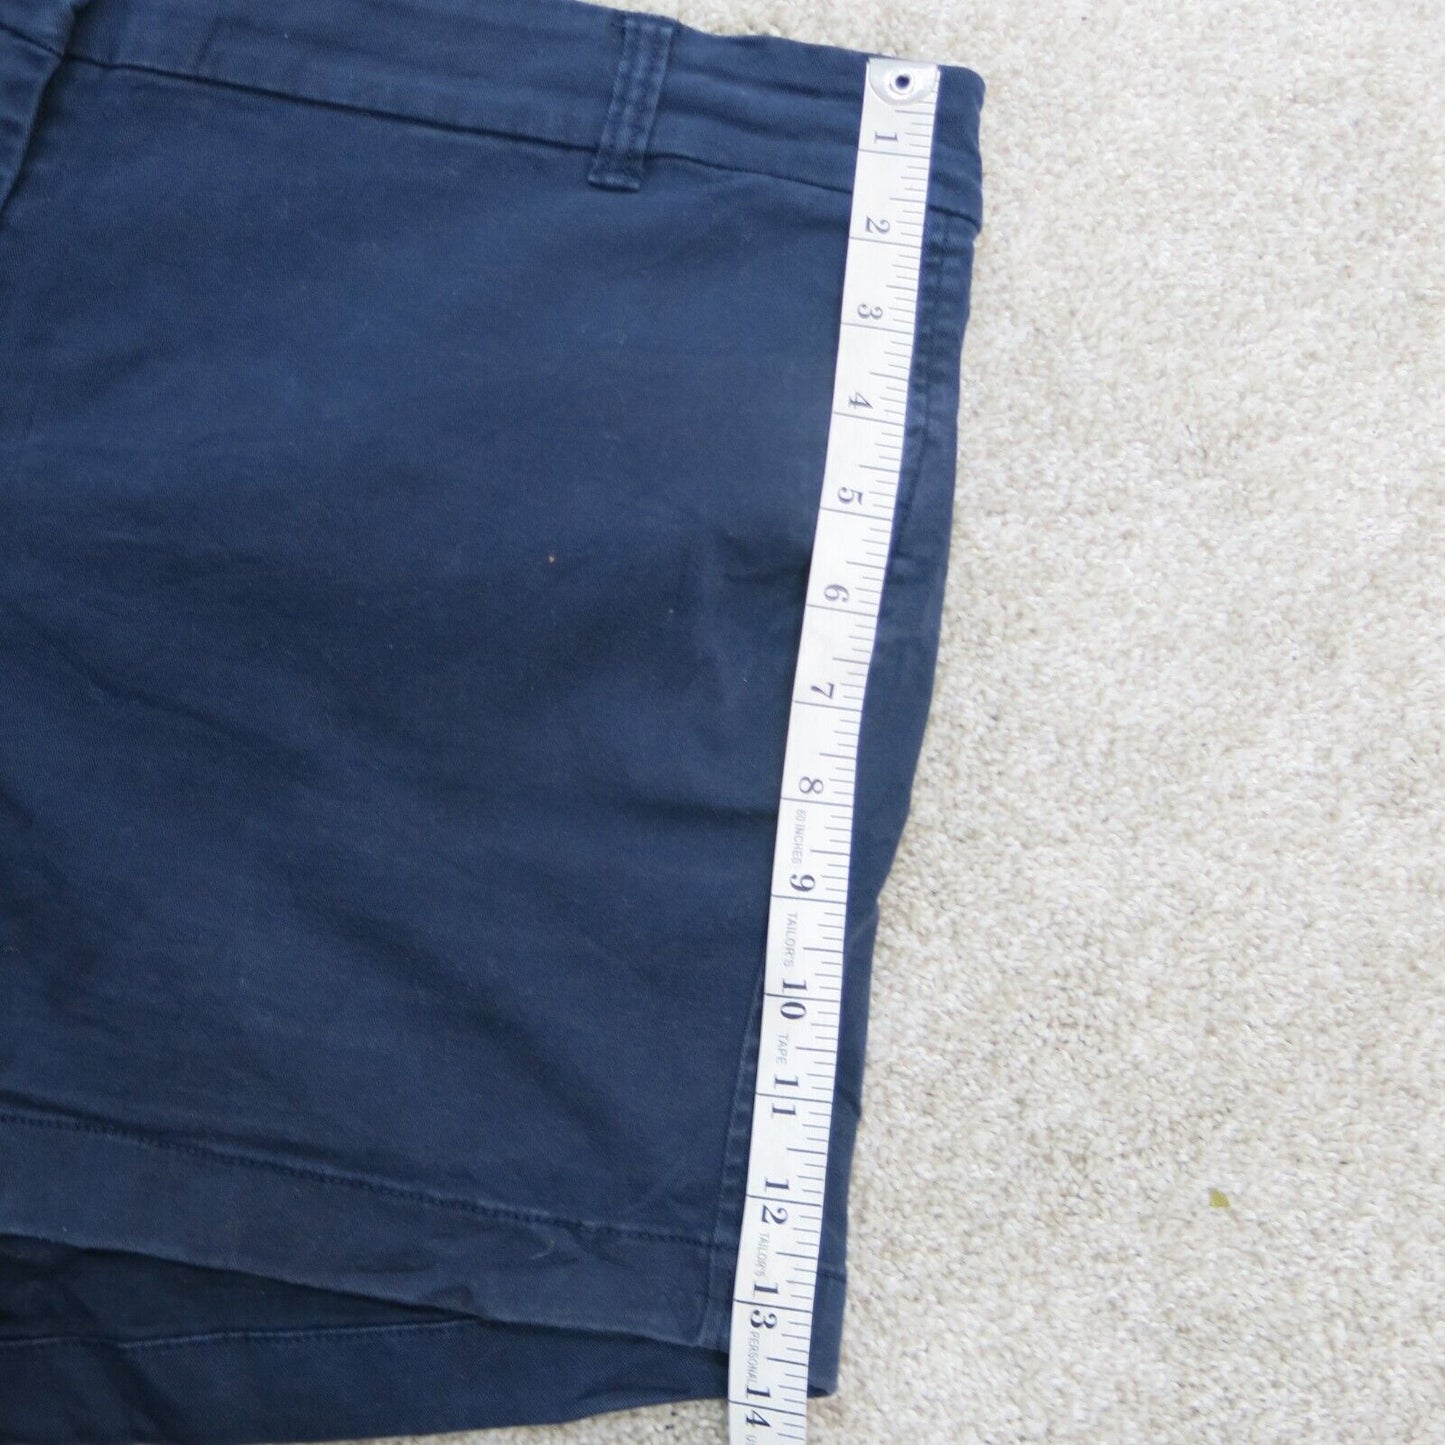 J. Crew Womens Chino Shorts High Rise Flat Front Slash Pocket Solid Blue Size 16